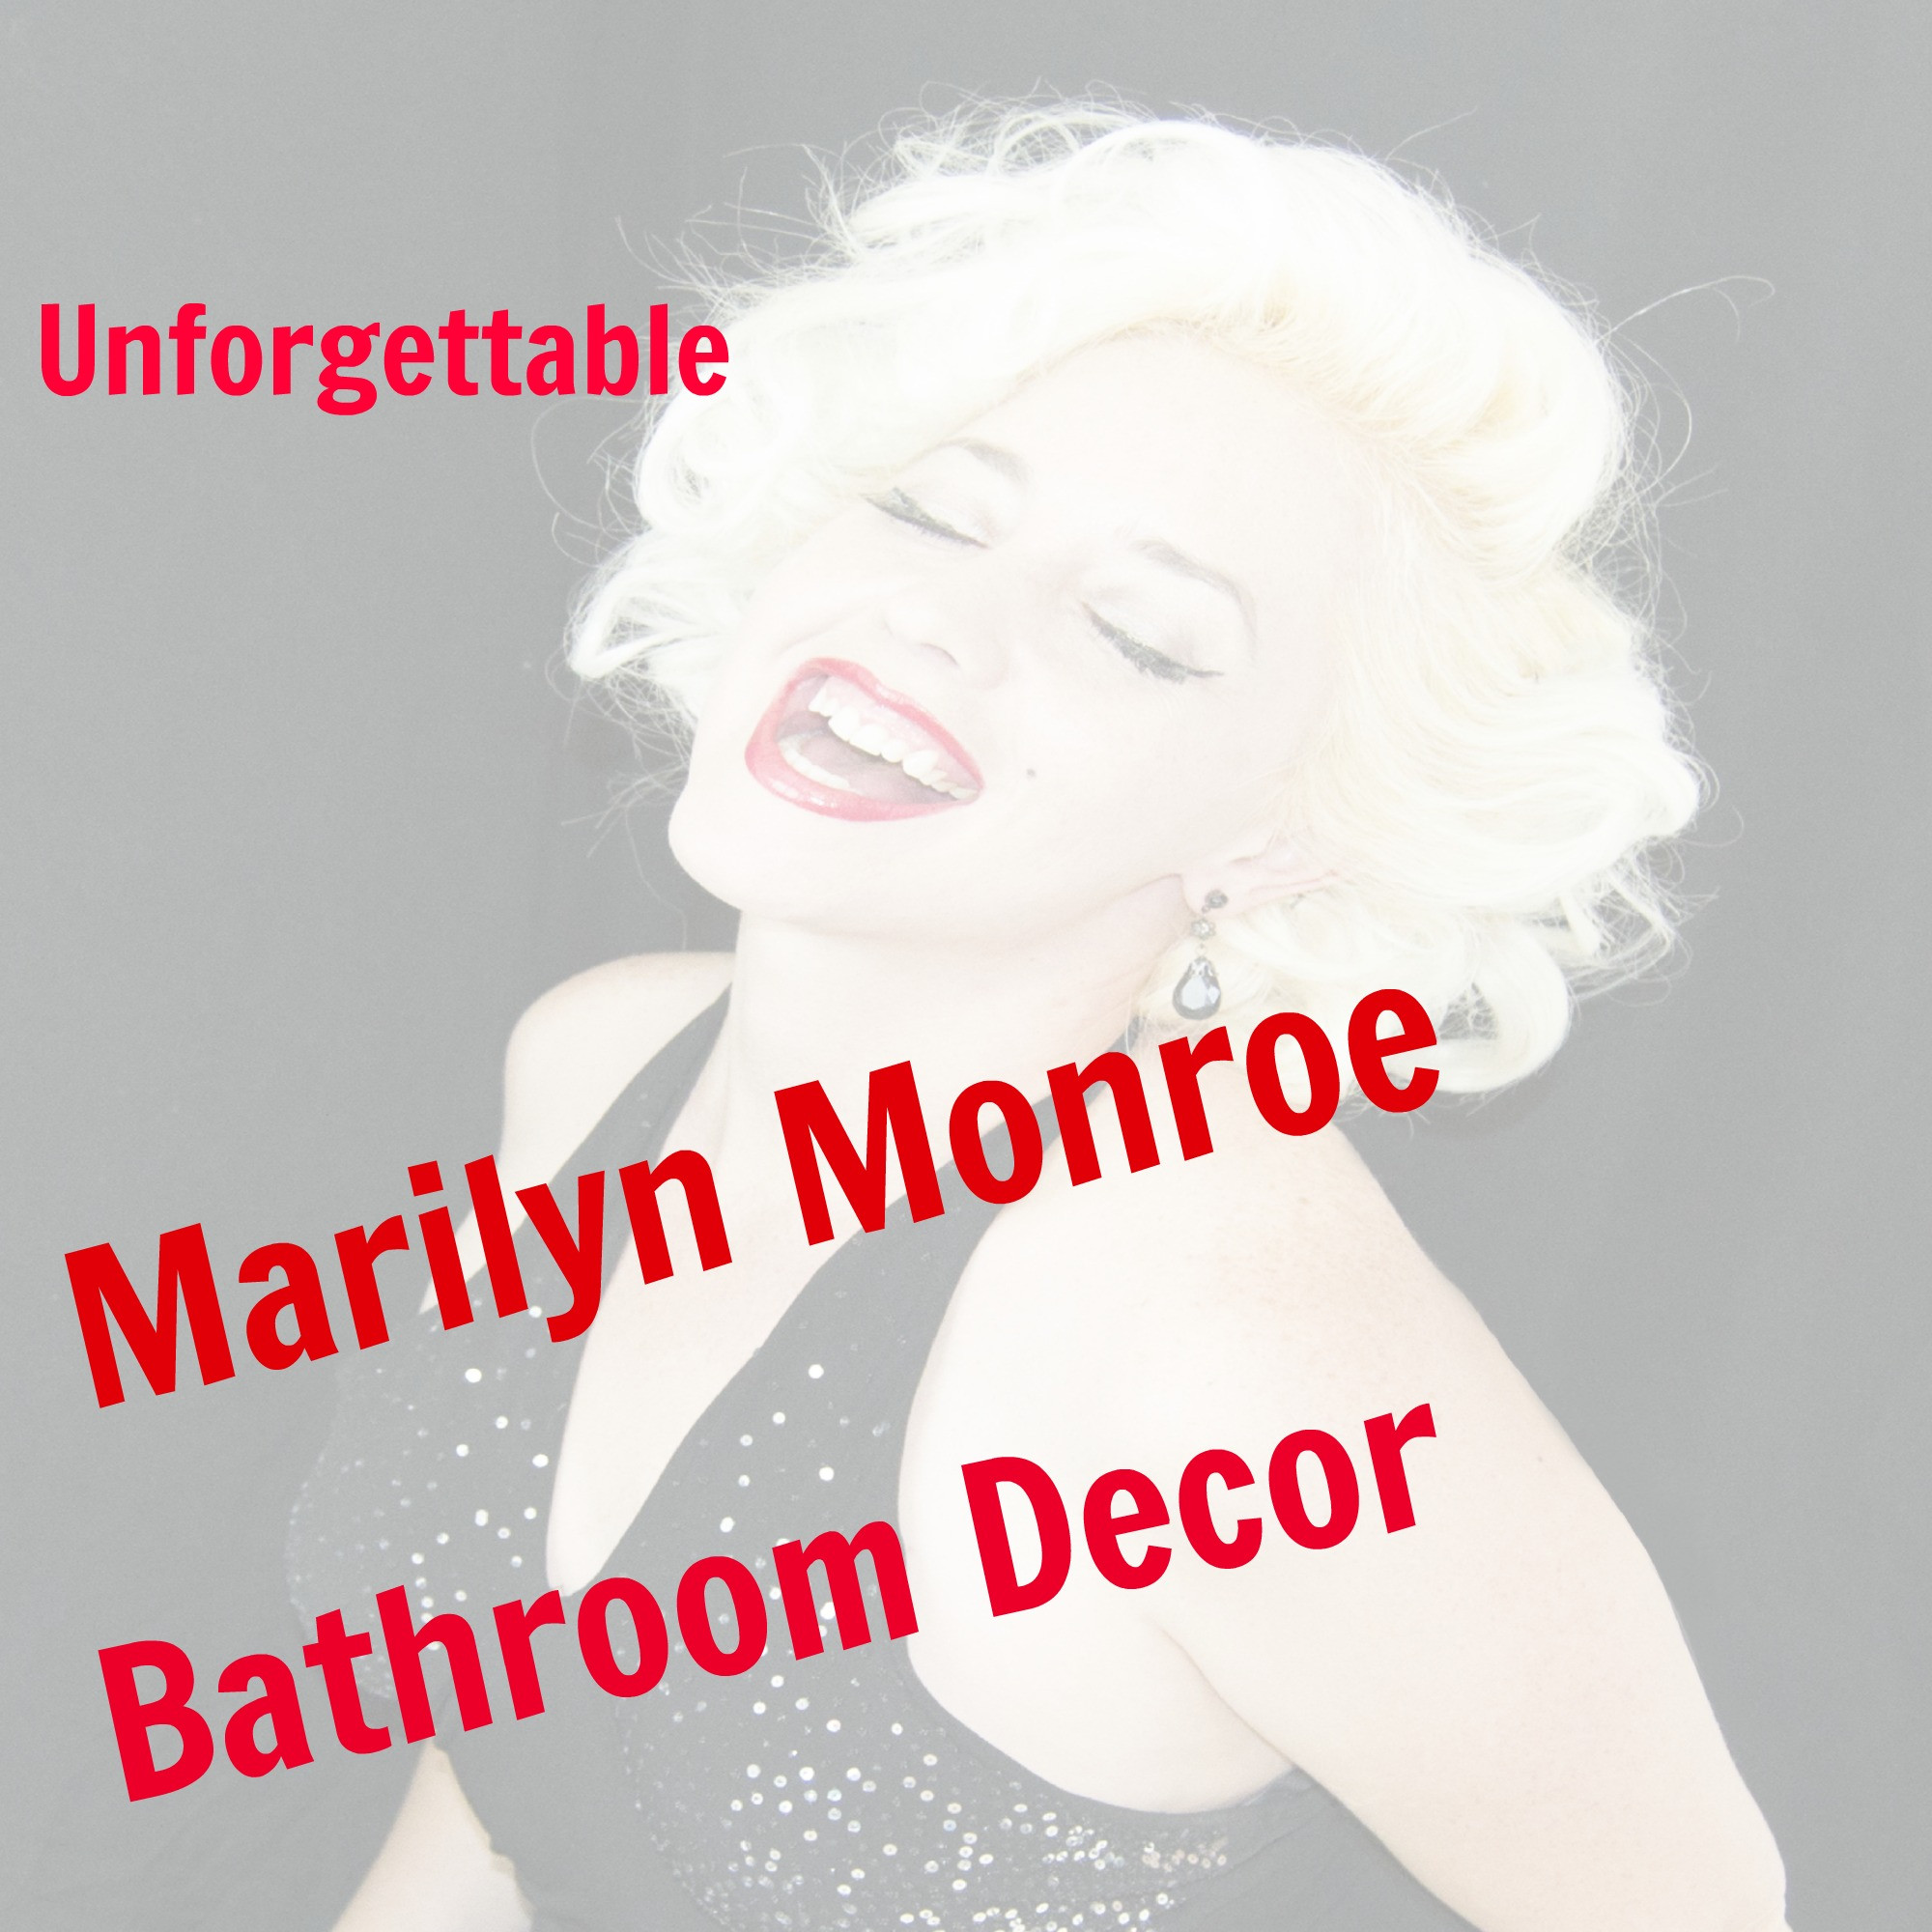 Marilyn Monroe Bathroom Decor
 Marilyn Monroe Bathroom Decor